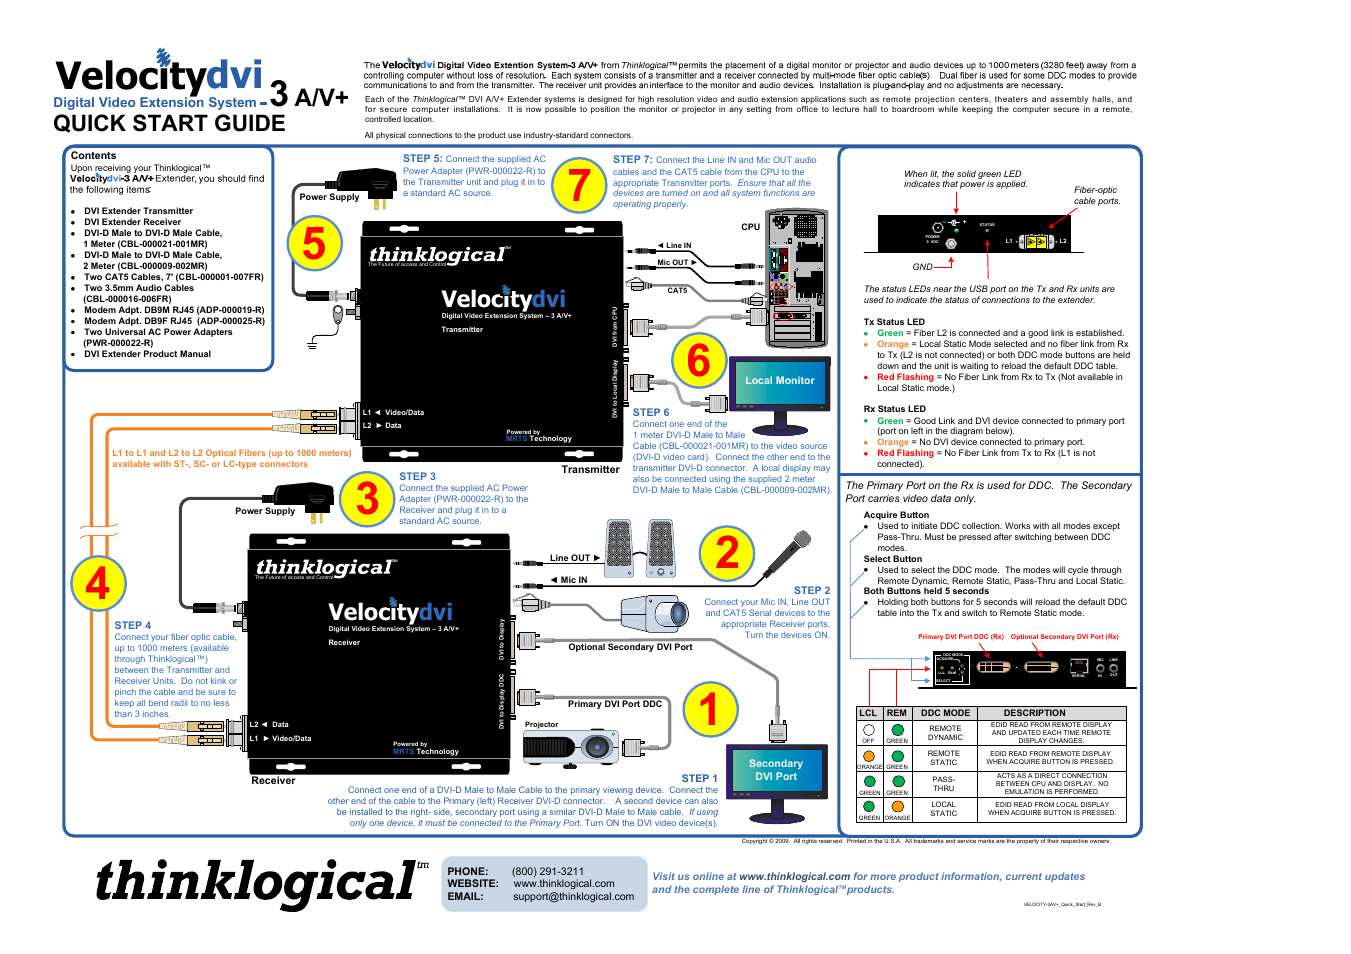 Velocitydvi System-6 A/V+ Quick Start Guide